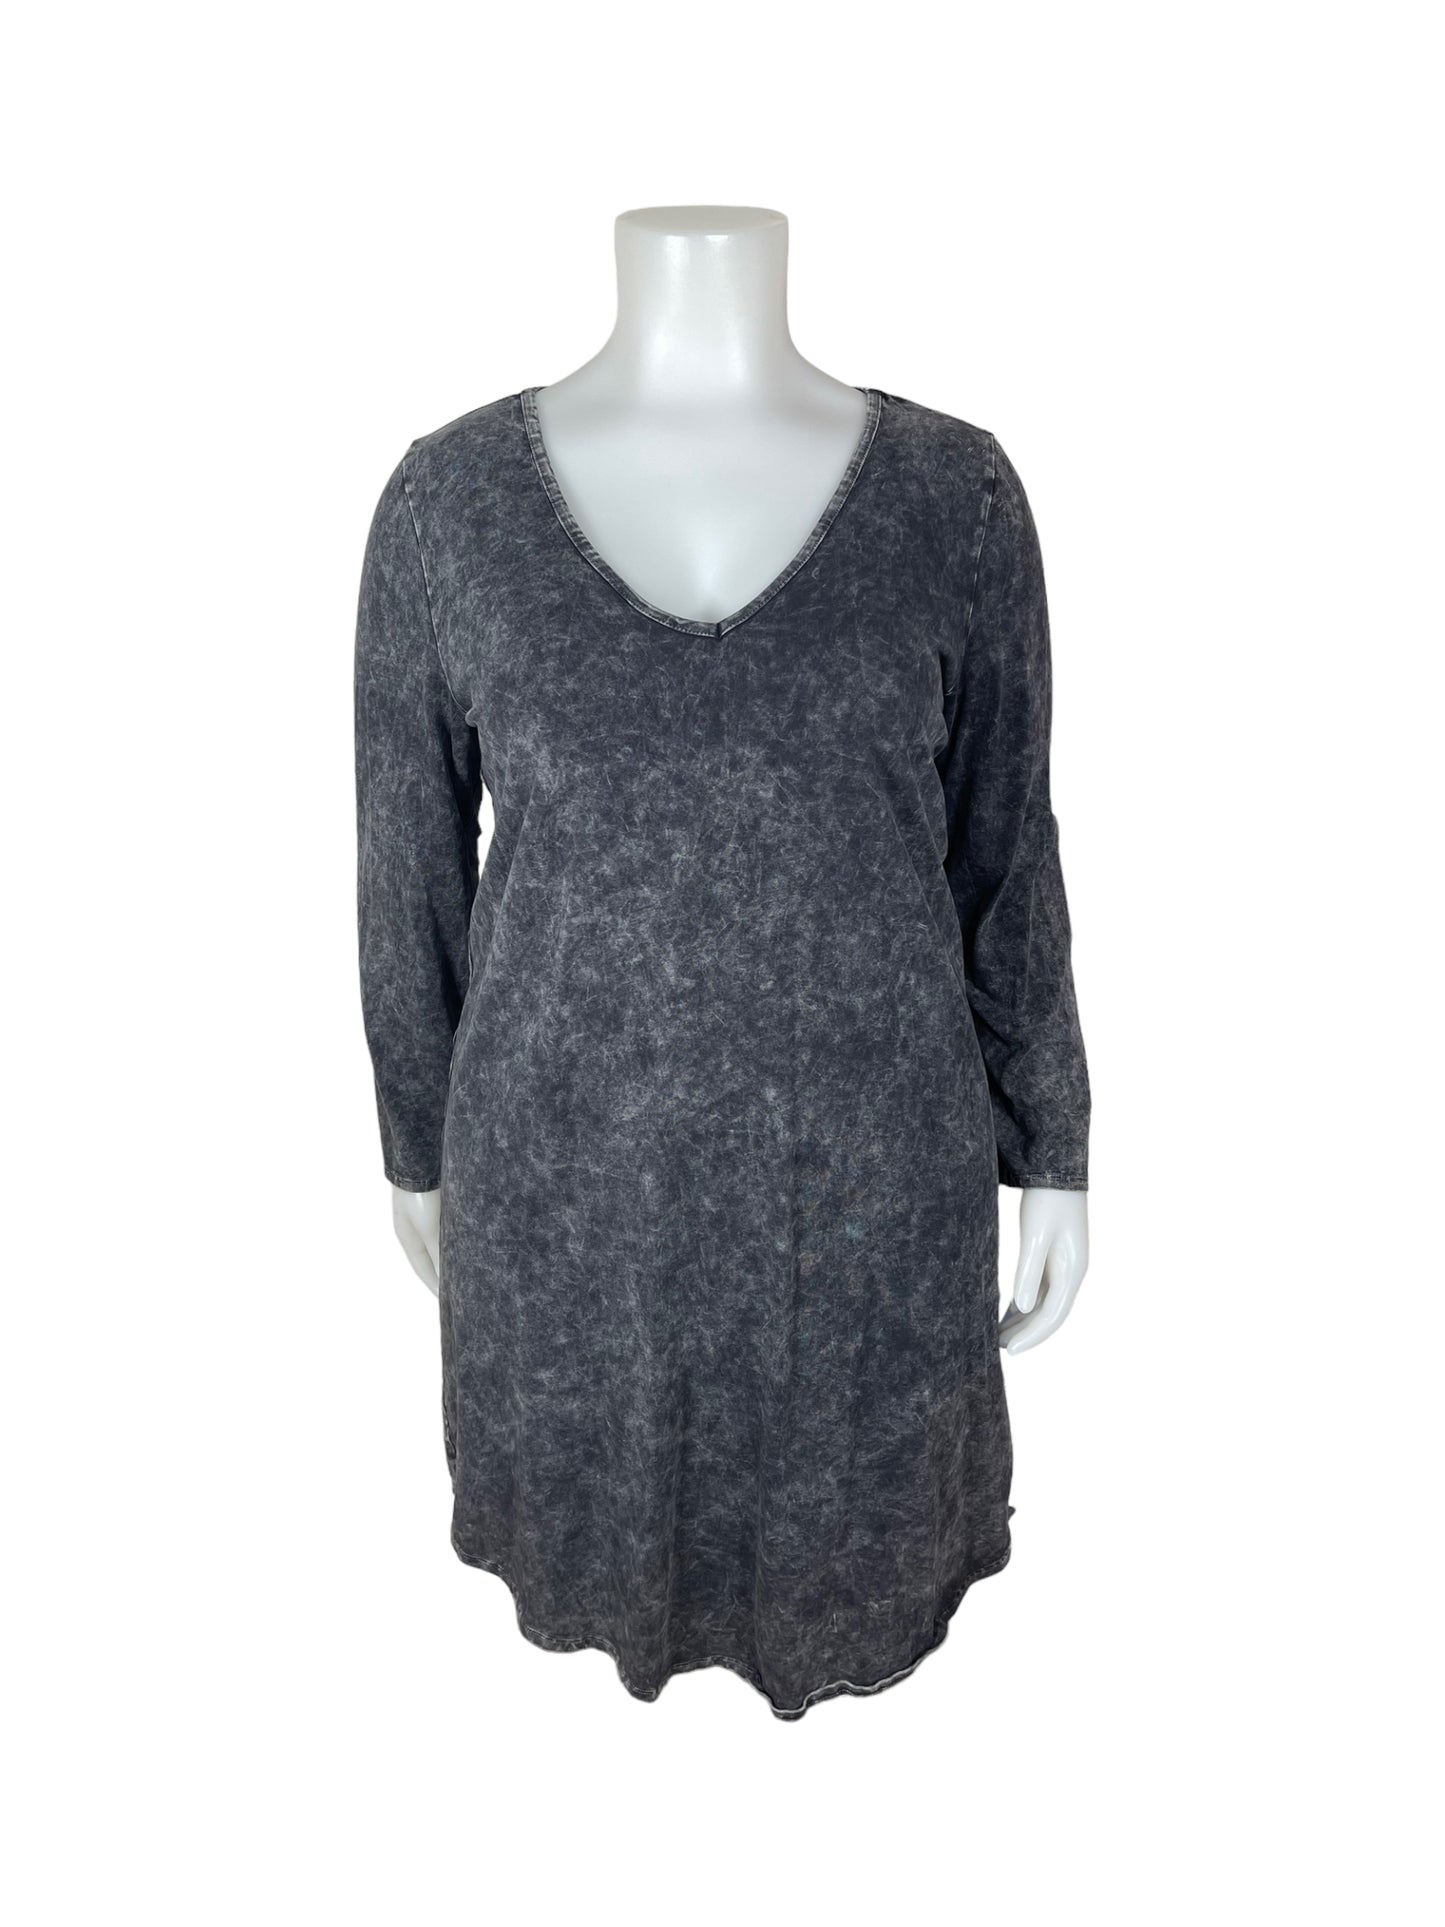 “Torrid” Grey Long Sleeve Shirt Dress (3)